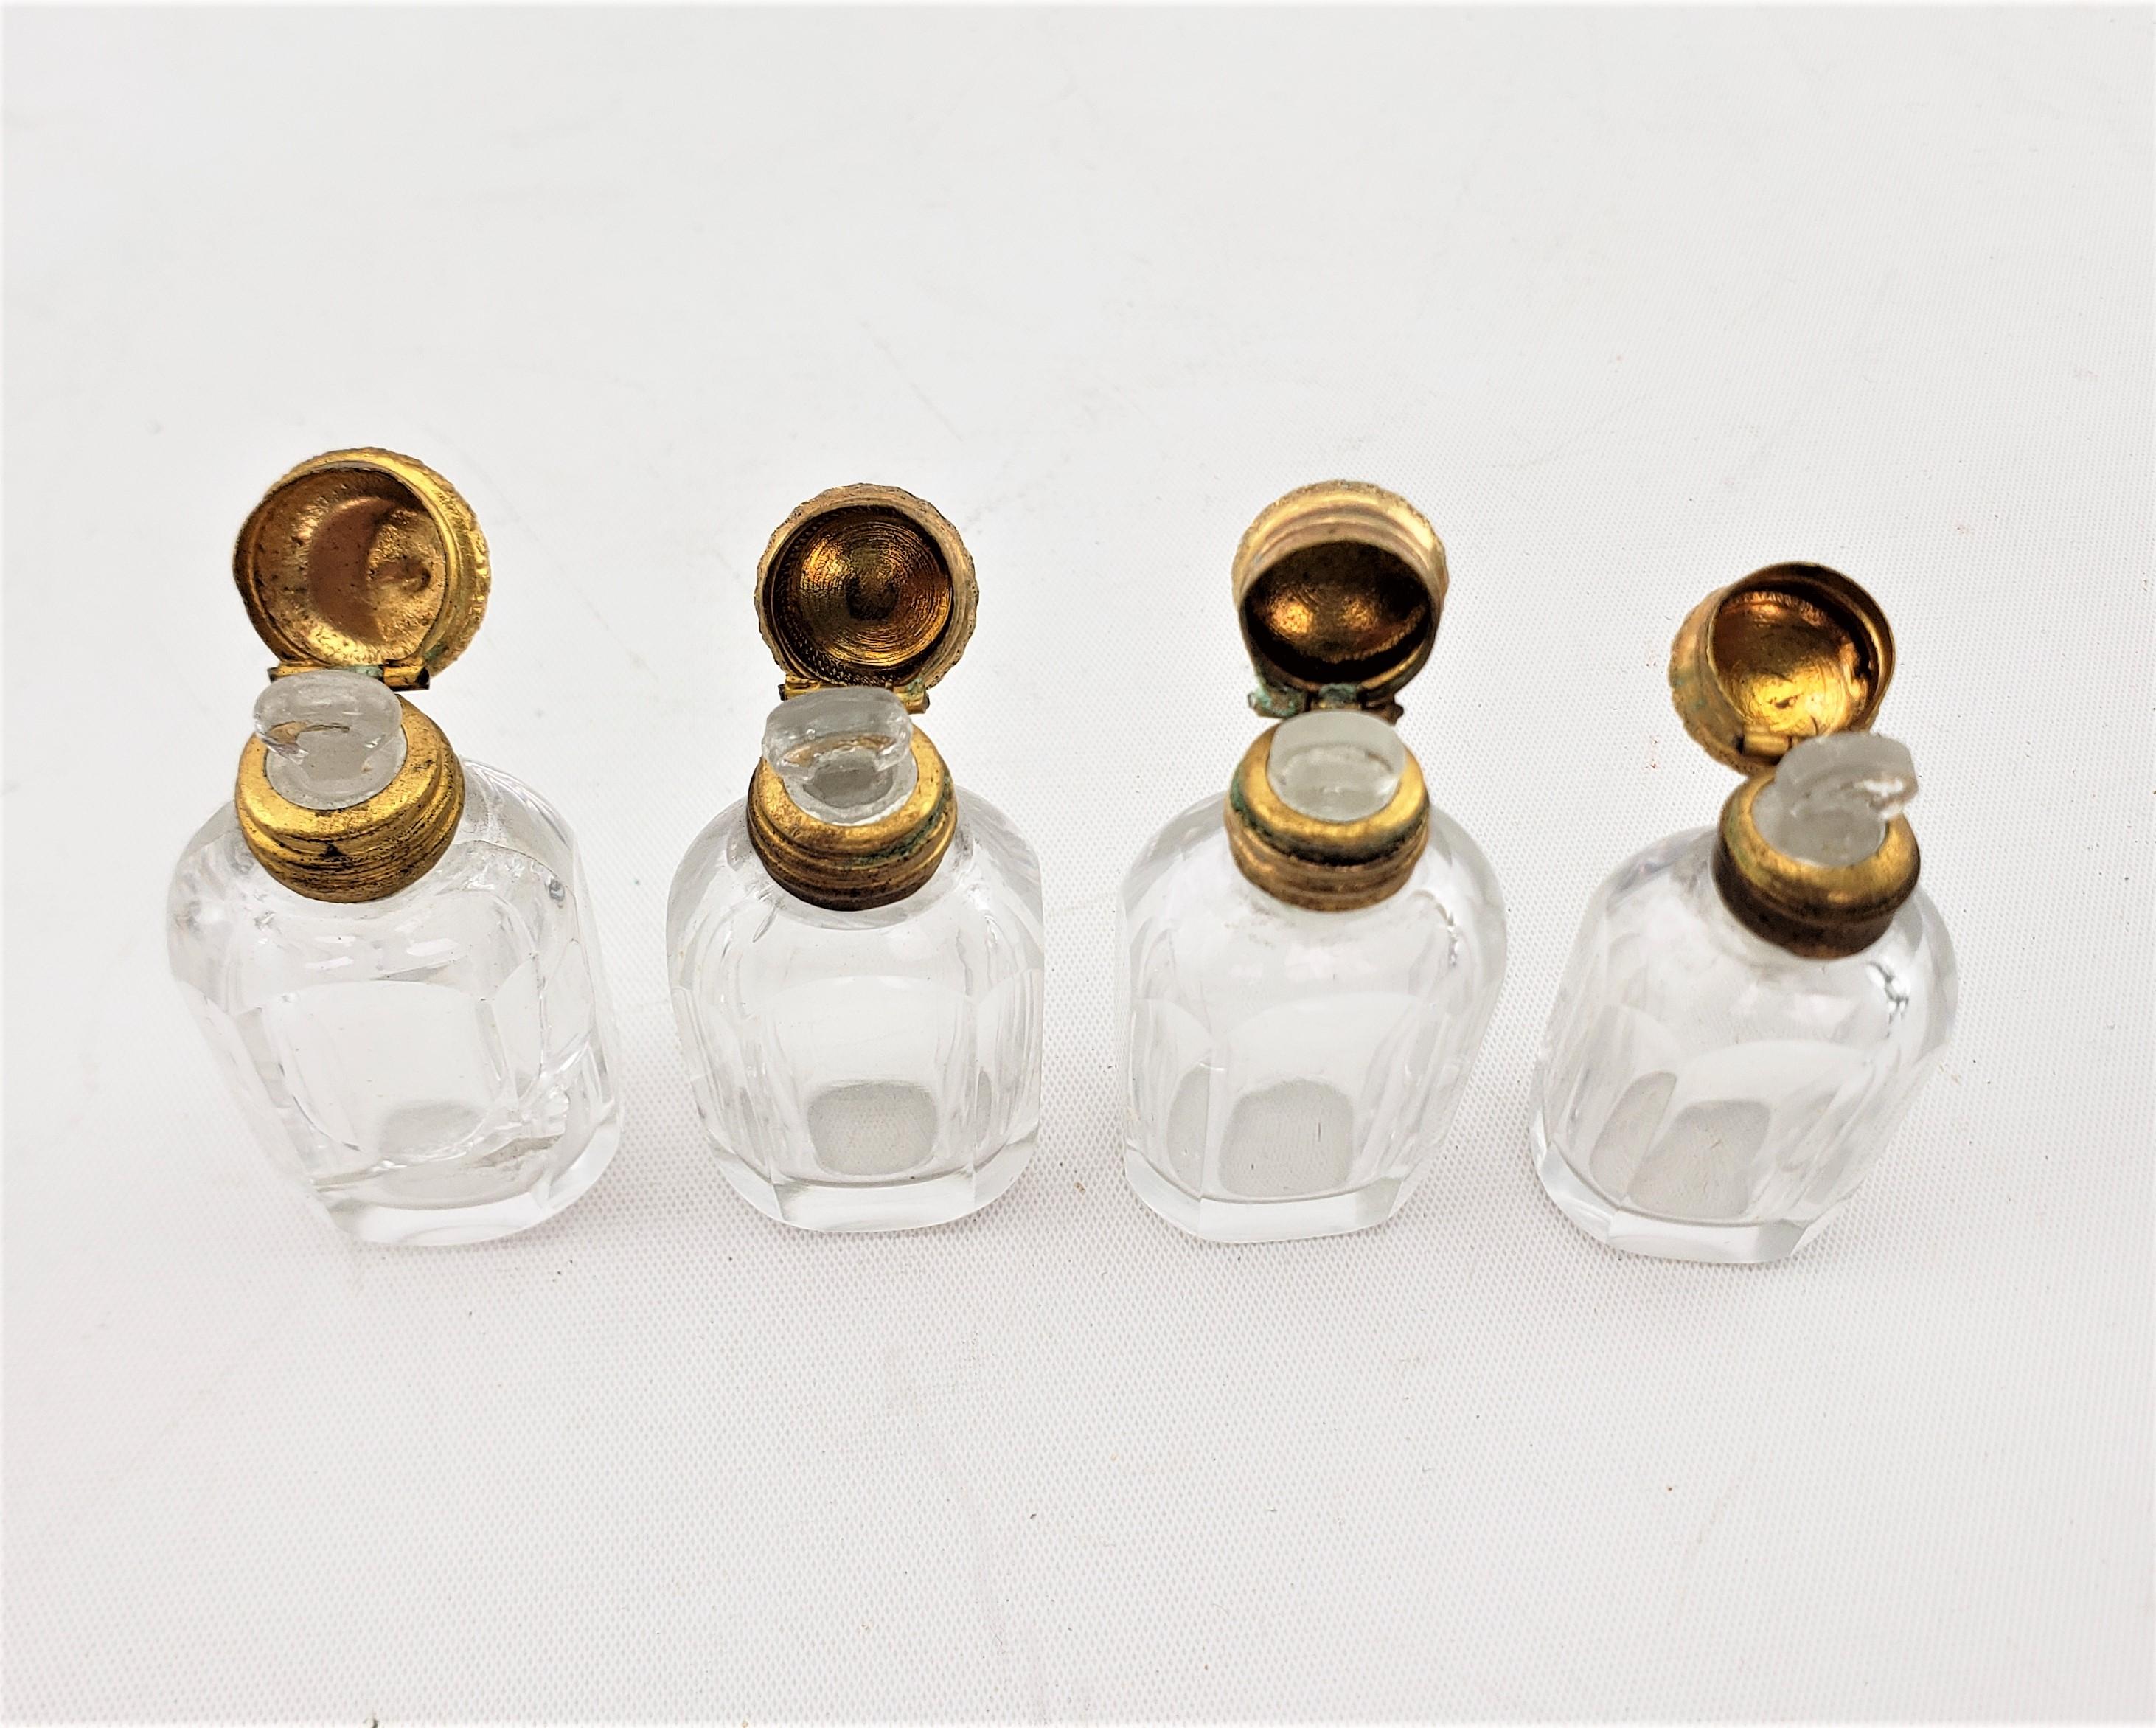 Antique Art Nouveau 3 Glass Perfume or Scent Bottle Set with Inset Shells For Sale 2